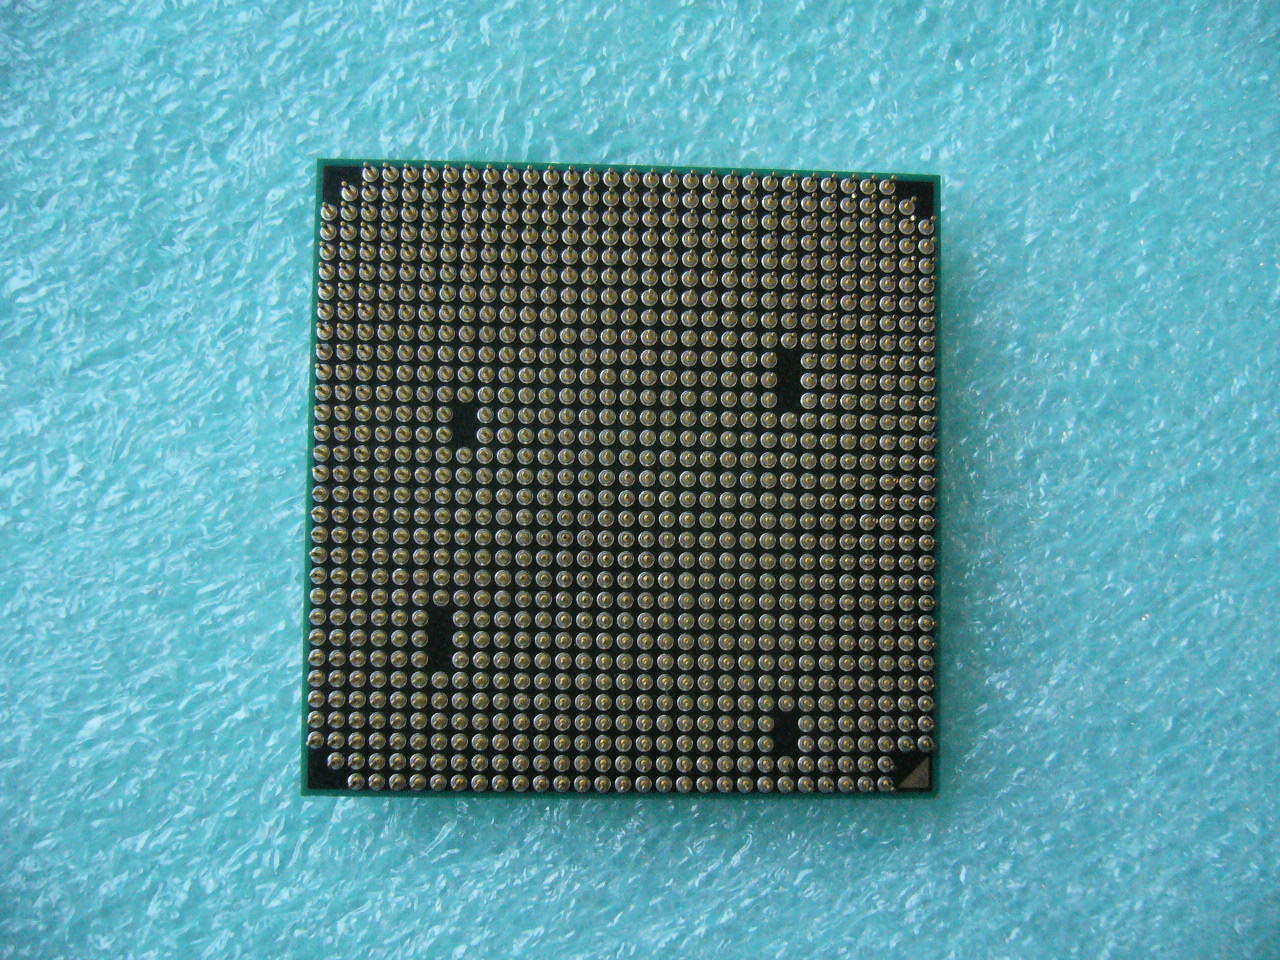 QTY 1x AMD Athlon II X2 215 2.7 GHz Dual-Core (ADX215OCK22GQ) CPU Socket AM3 - Click Image to Close